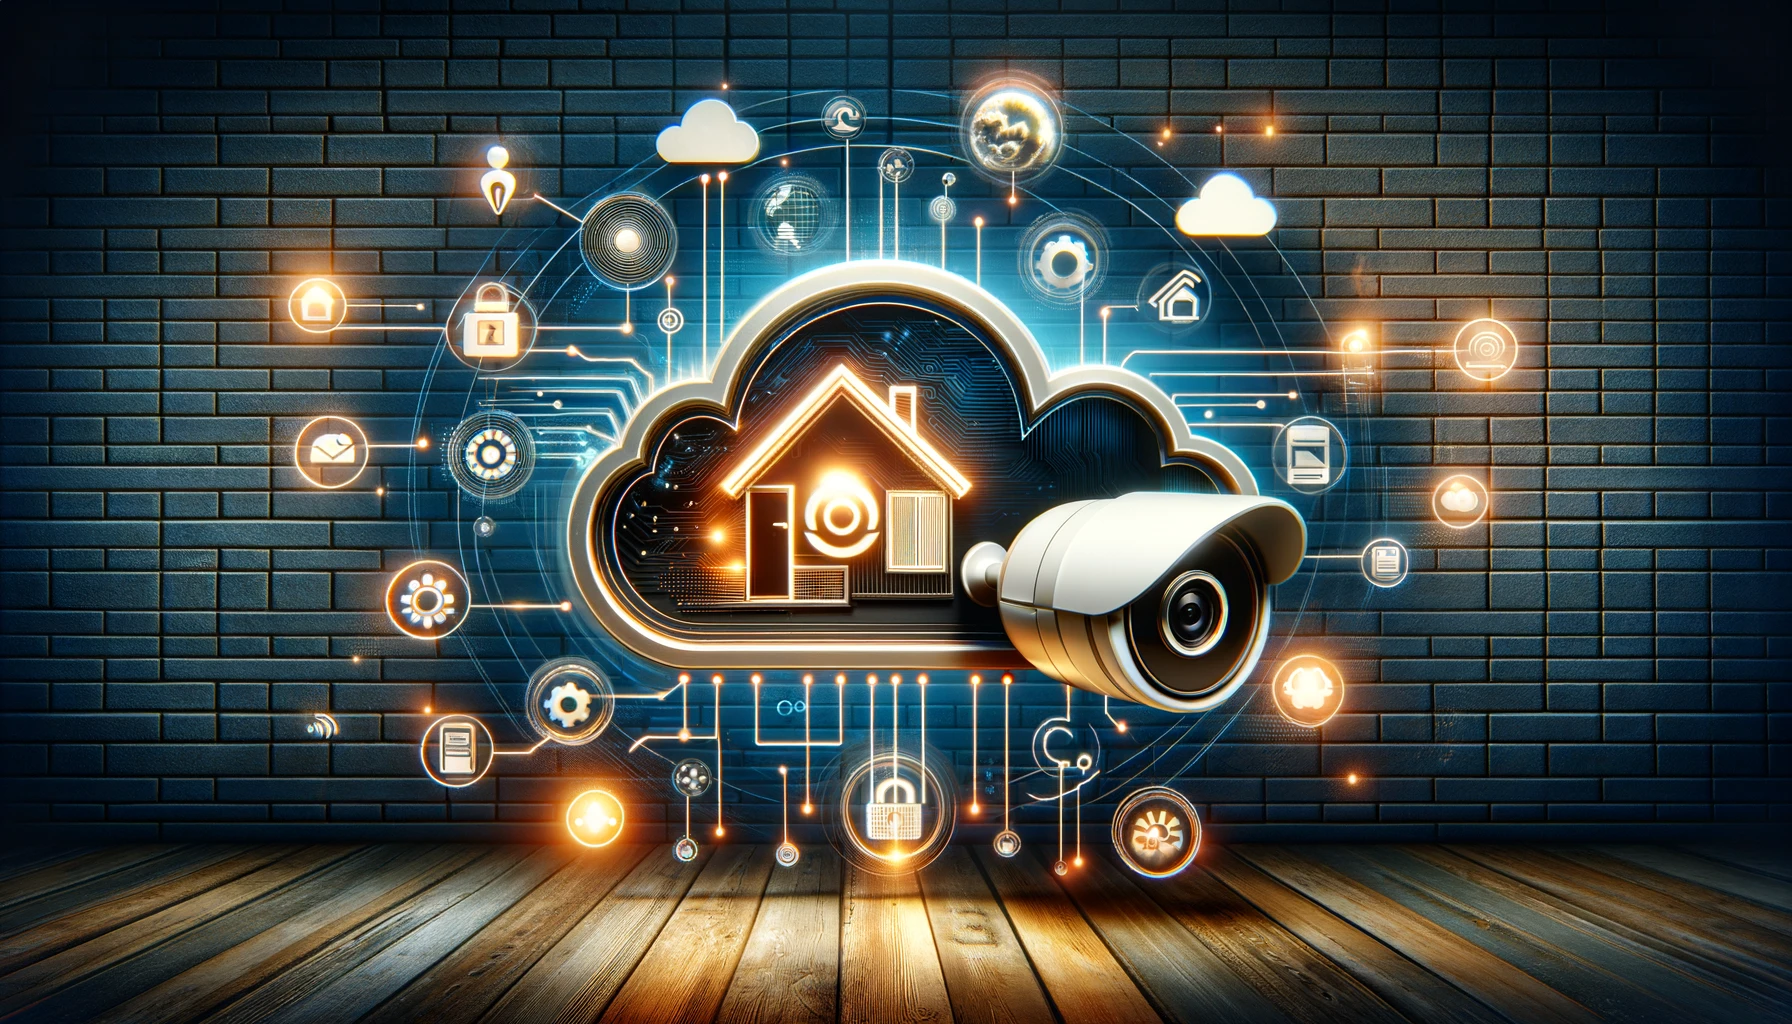 Cloud Storage for Home Security Cameras